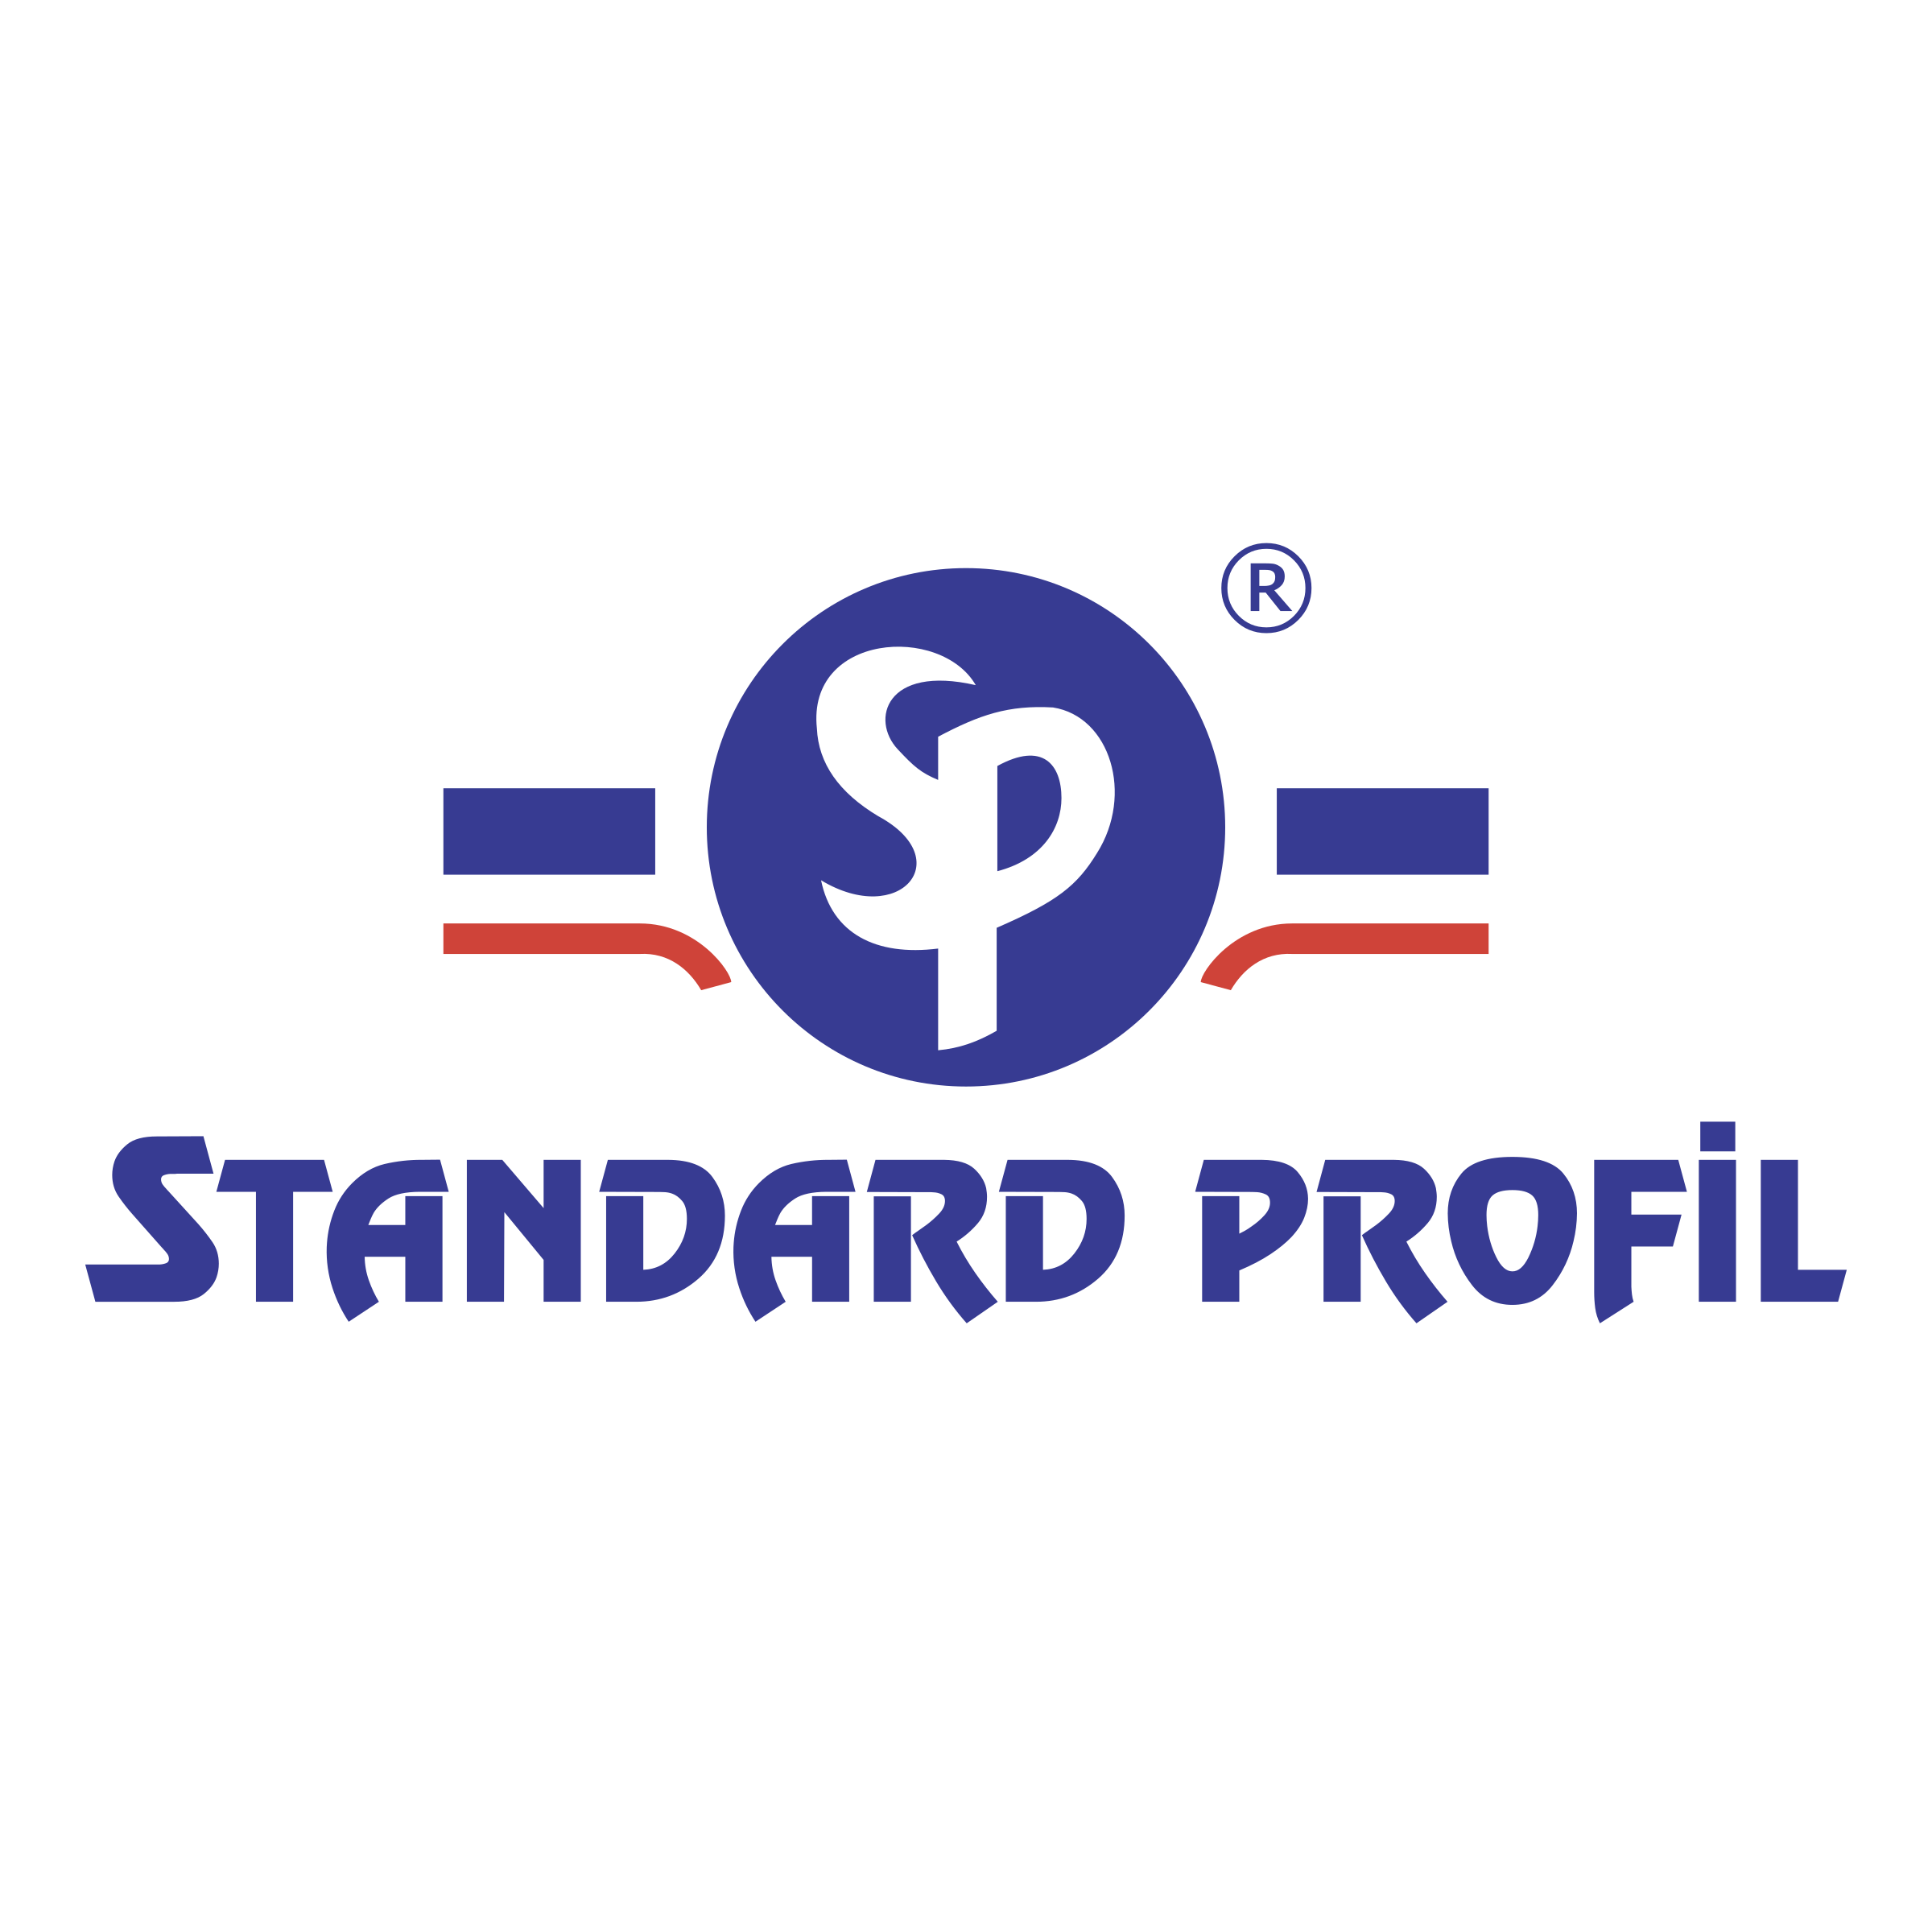 standard profil logo png transparent